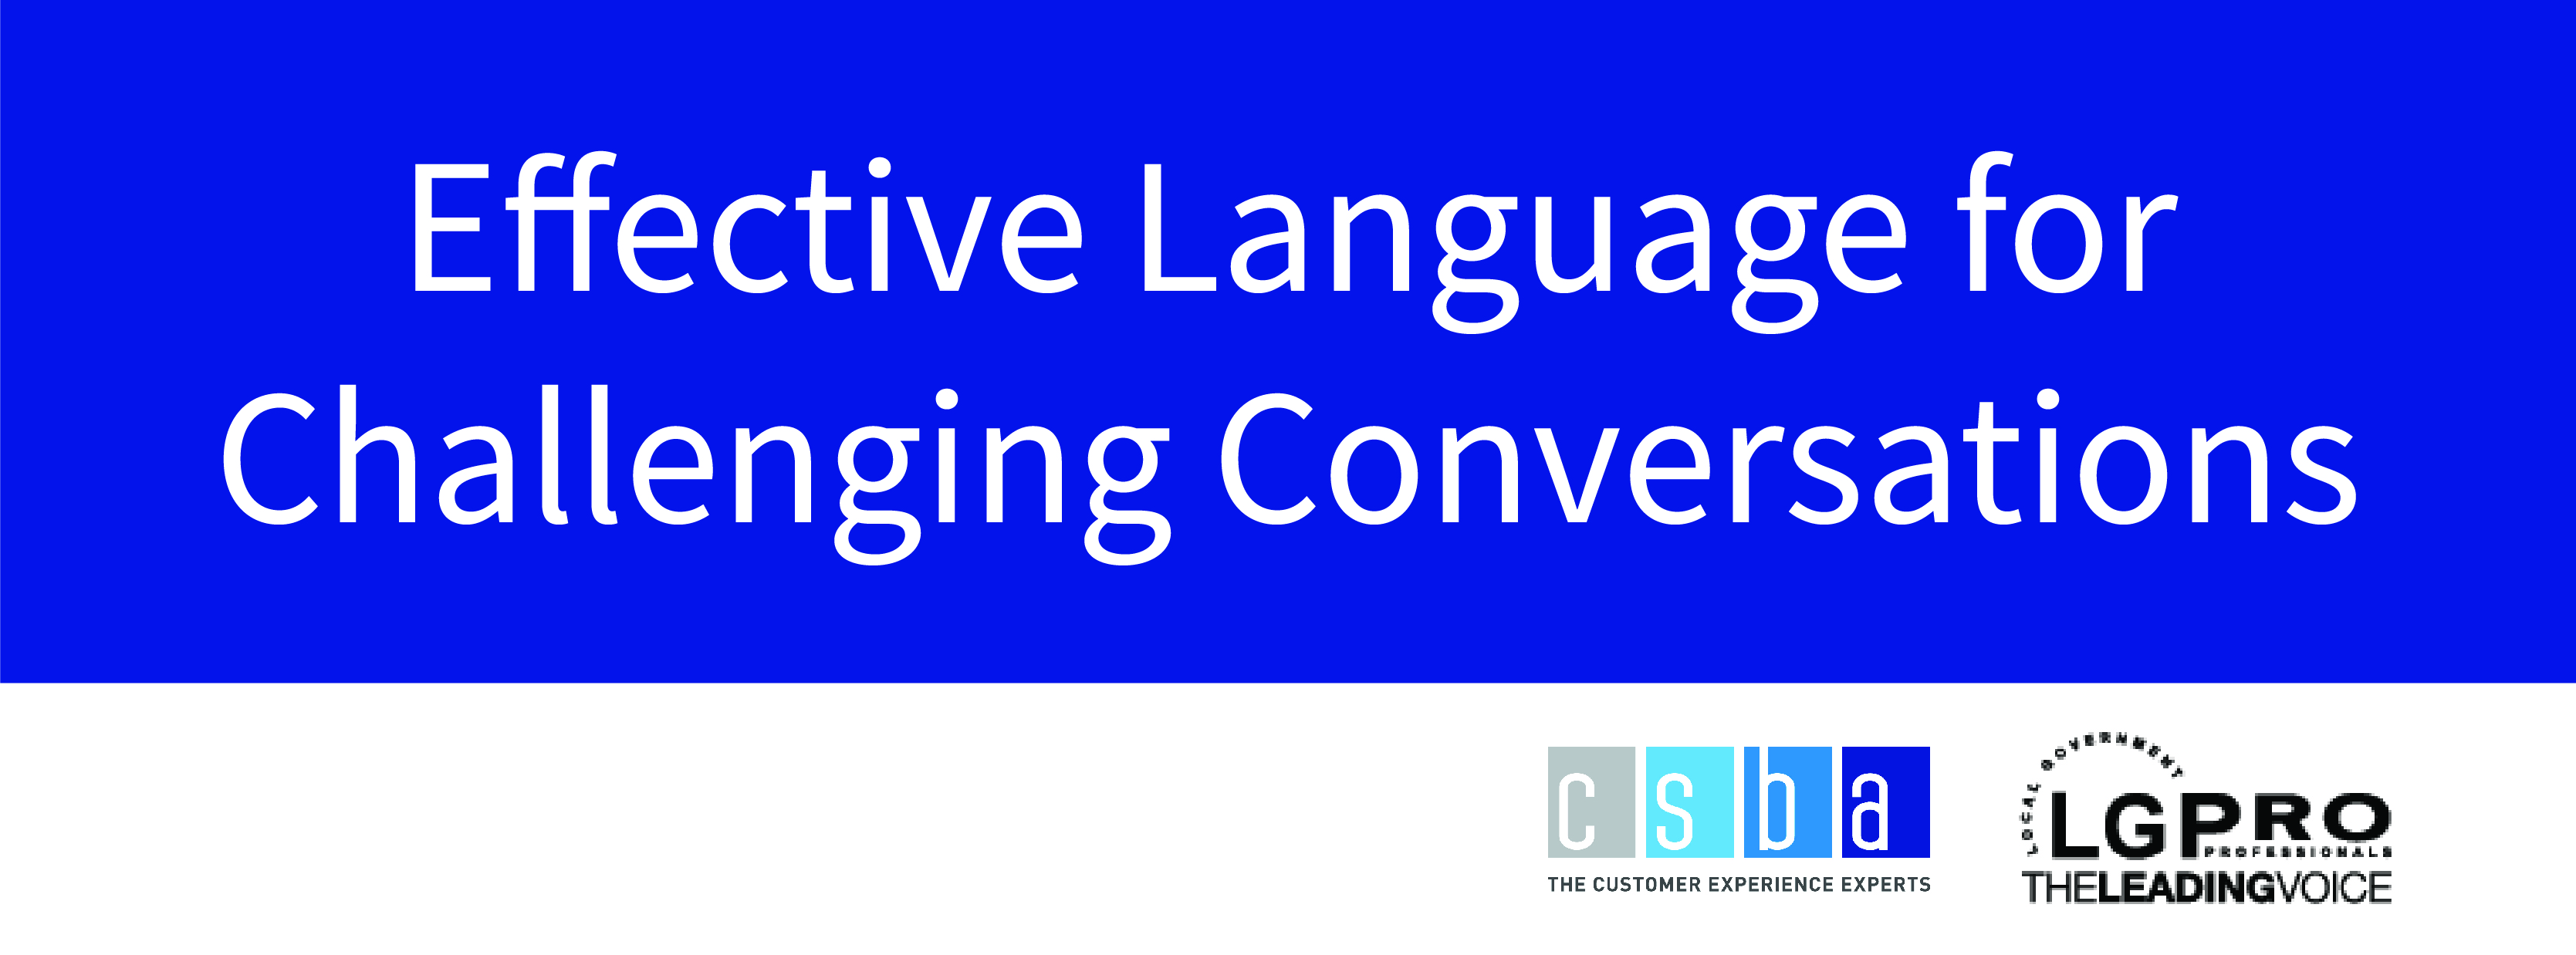 Effective Language for Challenging Conversations - Online